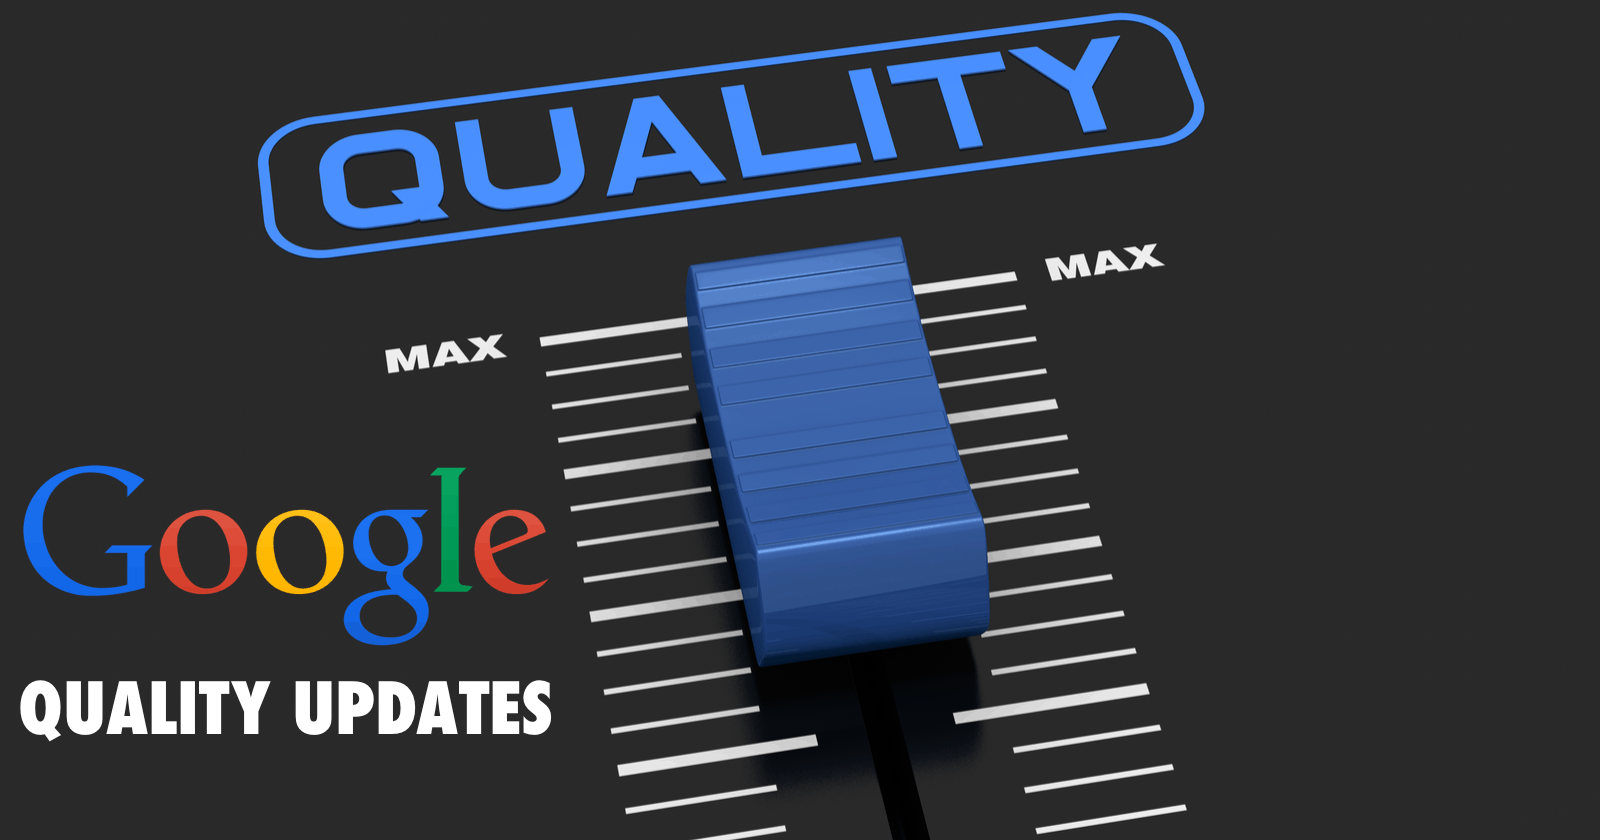 Google-quality-updates.png